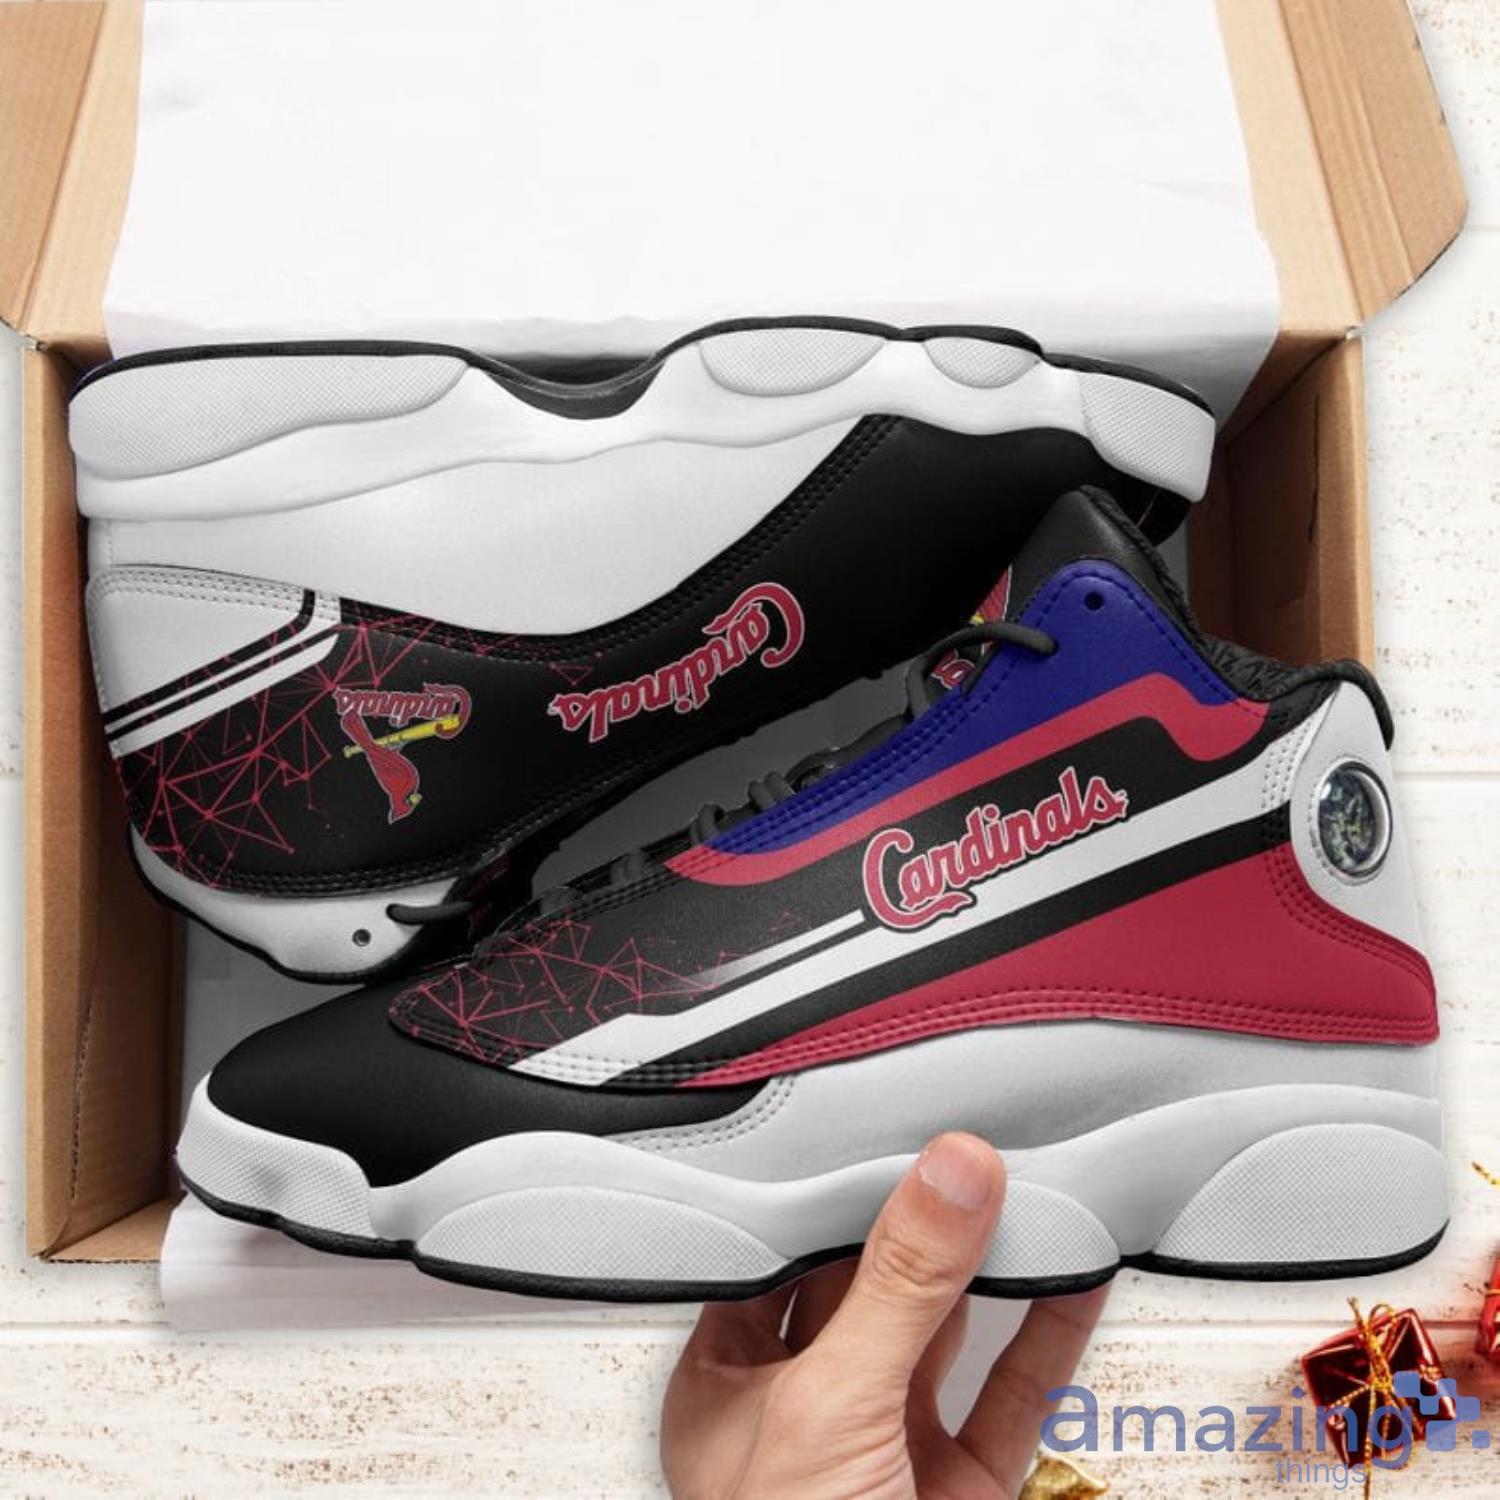 Mlb St Louis Cardinals Air Jordan 13 Shoes - Inspire Uplift